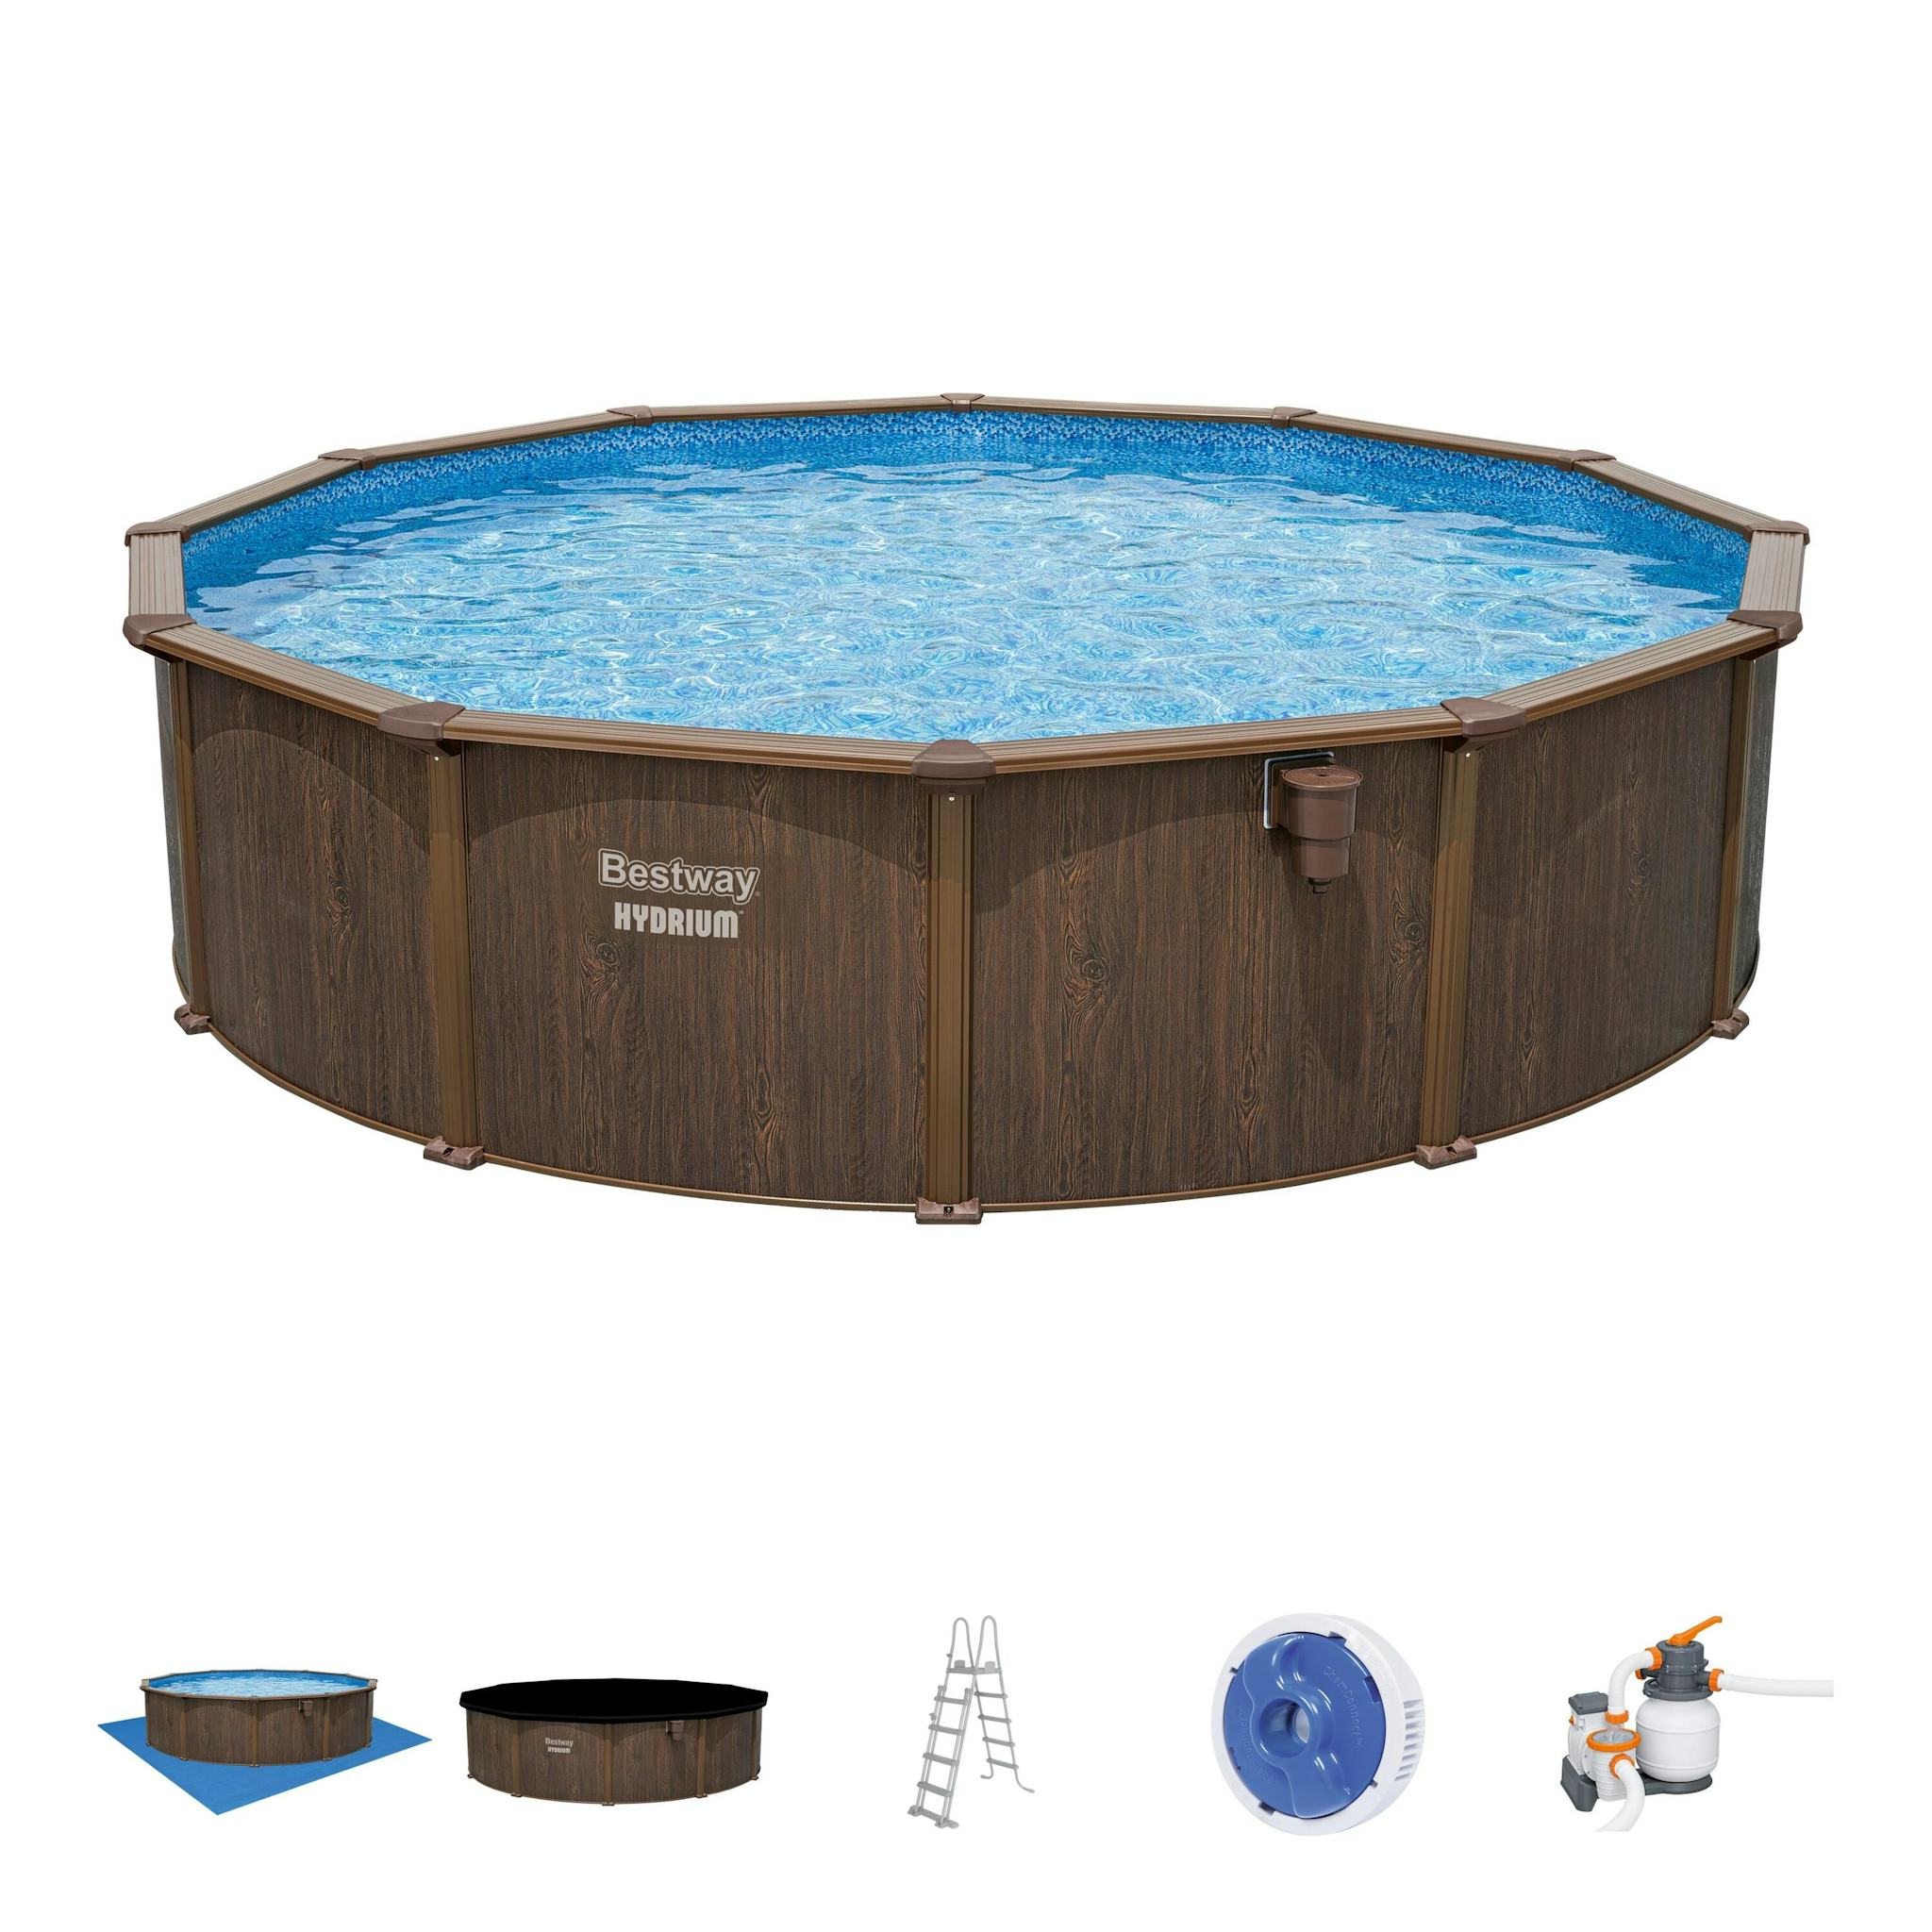 Piscine fuori terra Set piscina fuori terra rotonda Hydrium da 550x130 cm effetto legno Bestway 1